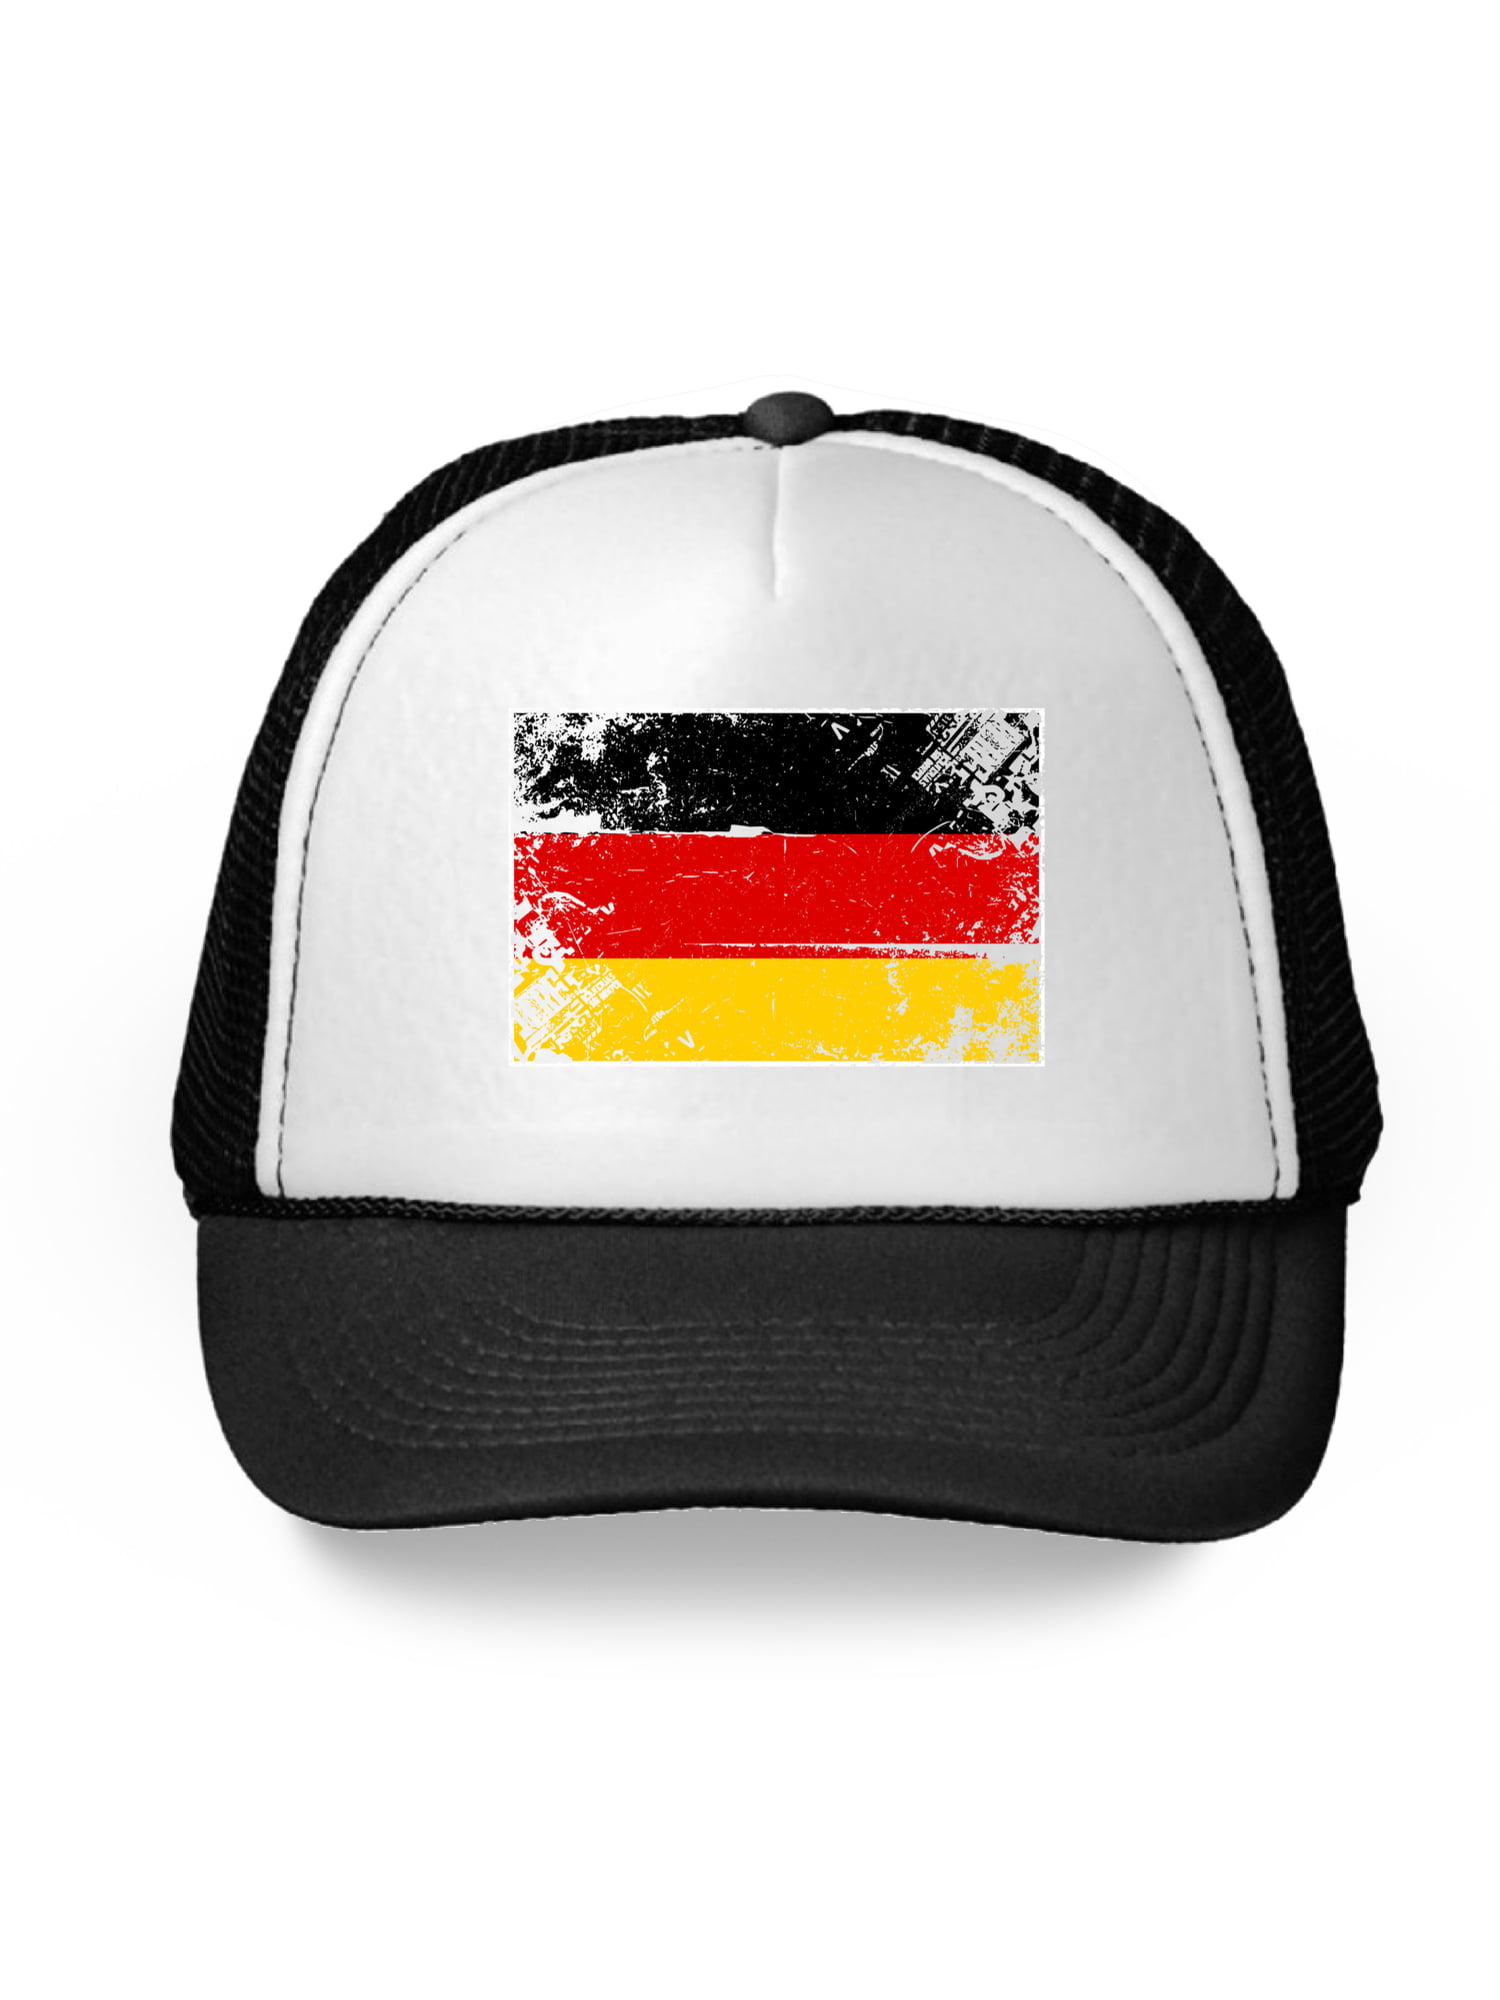 Speedy Pros Soft Baseball Cap German Flag Frankfurt Embroidery Dad Hats for Men & Women 